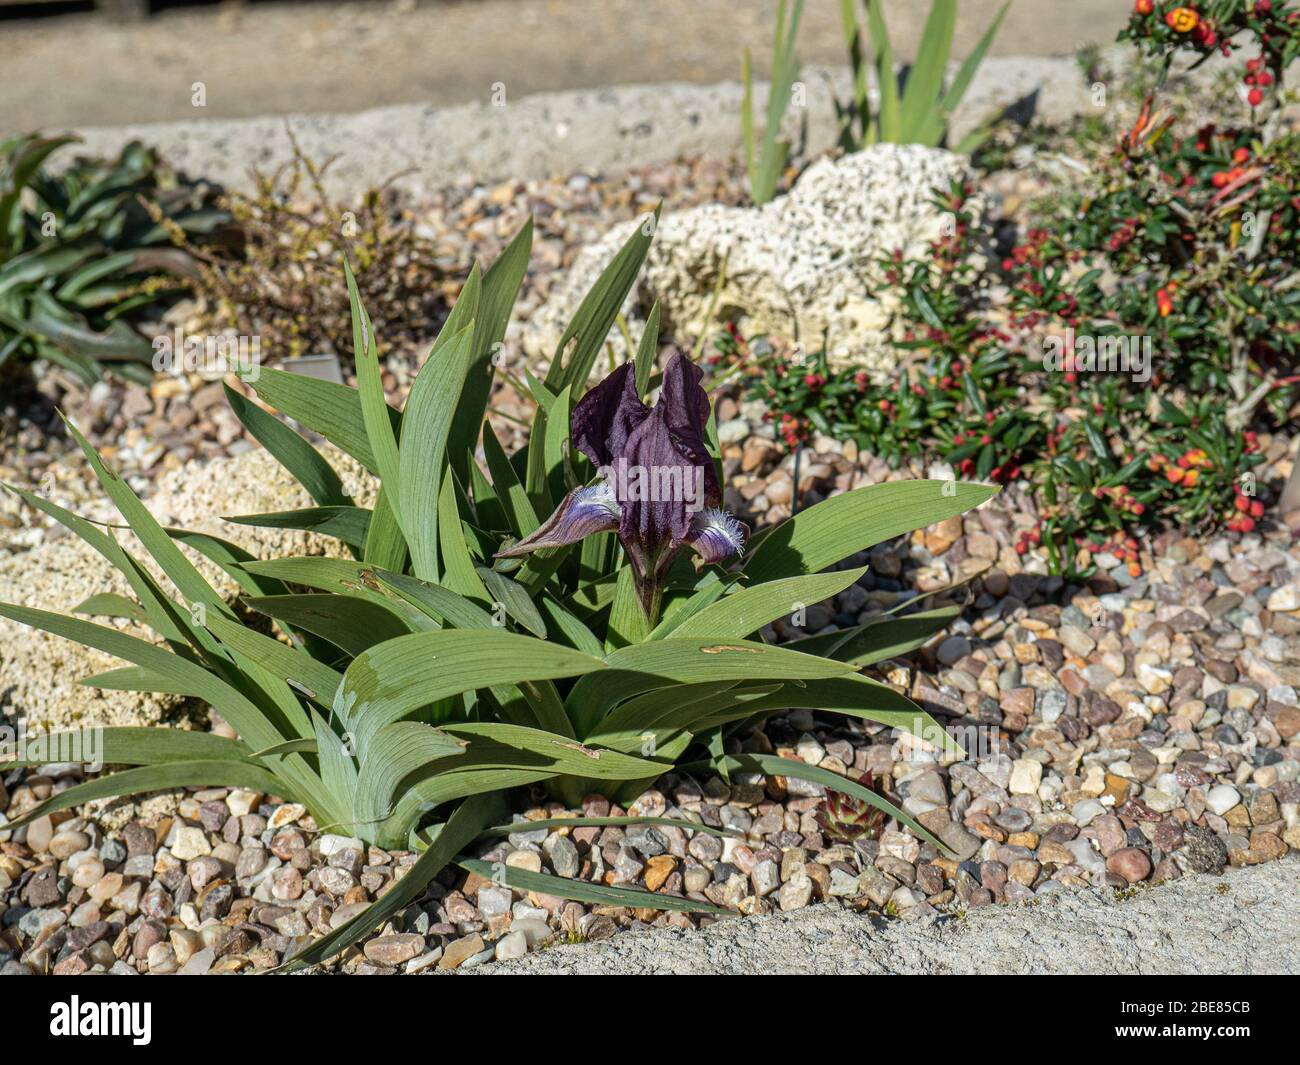 The deep purple miniature Iris, Iris suaveolens flowering in a sink garden Stock Photo